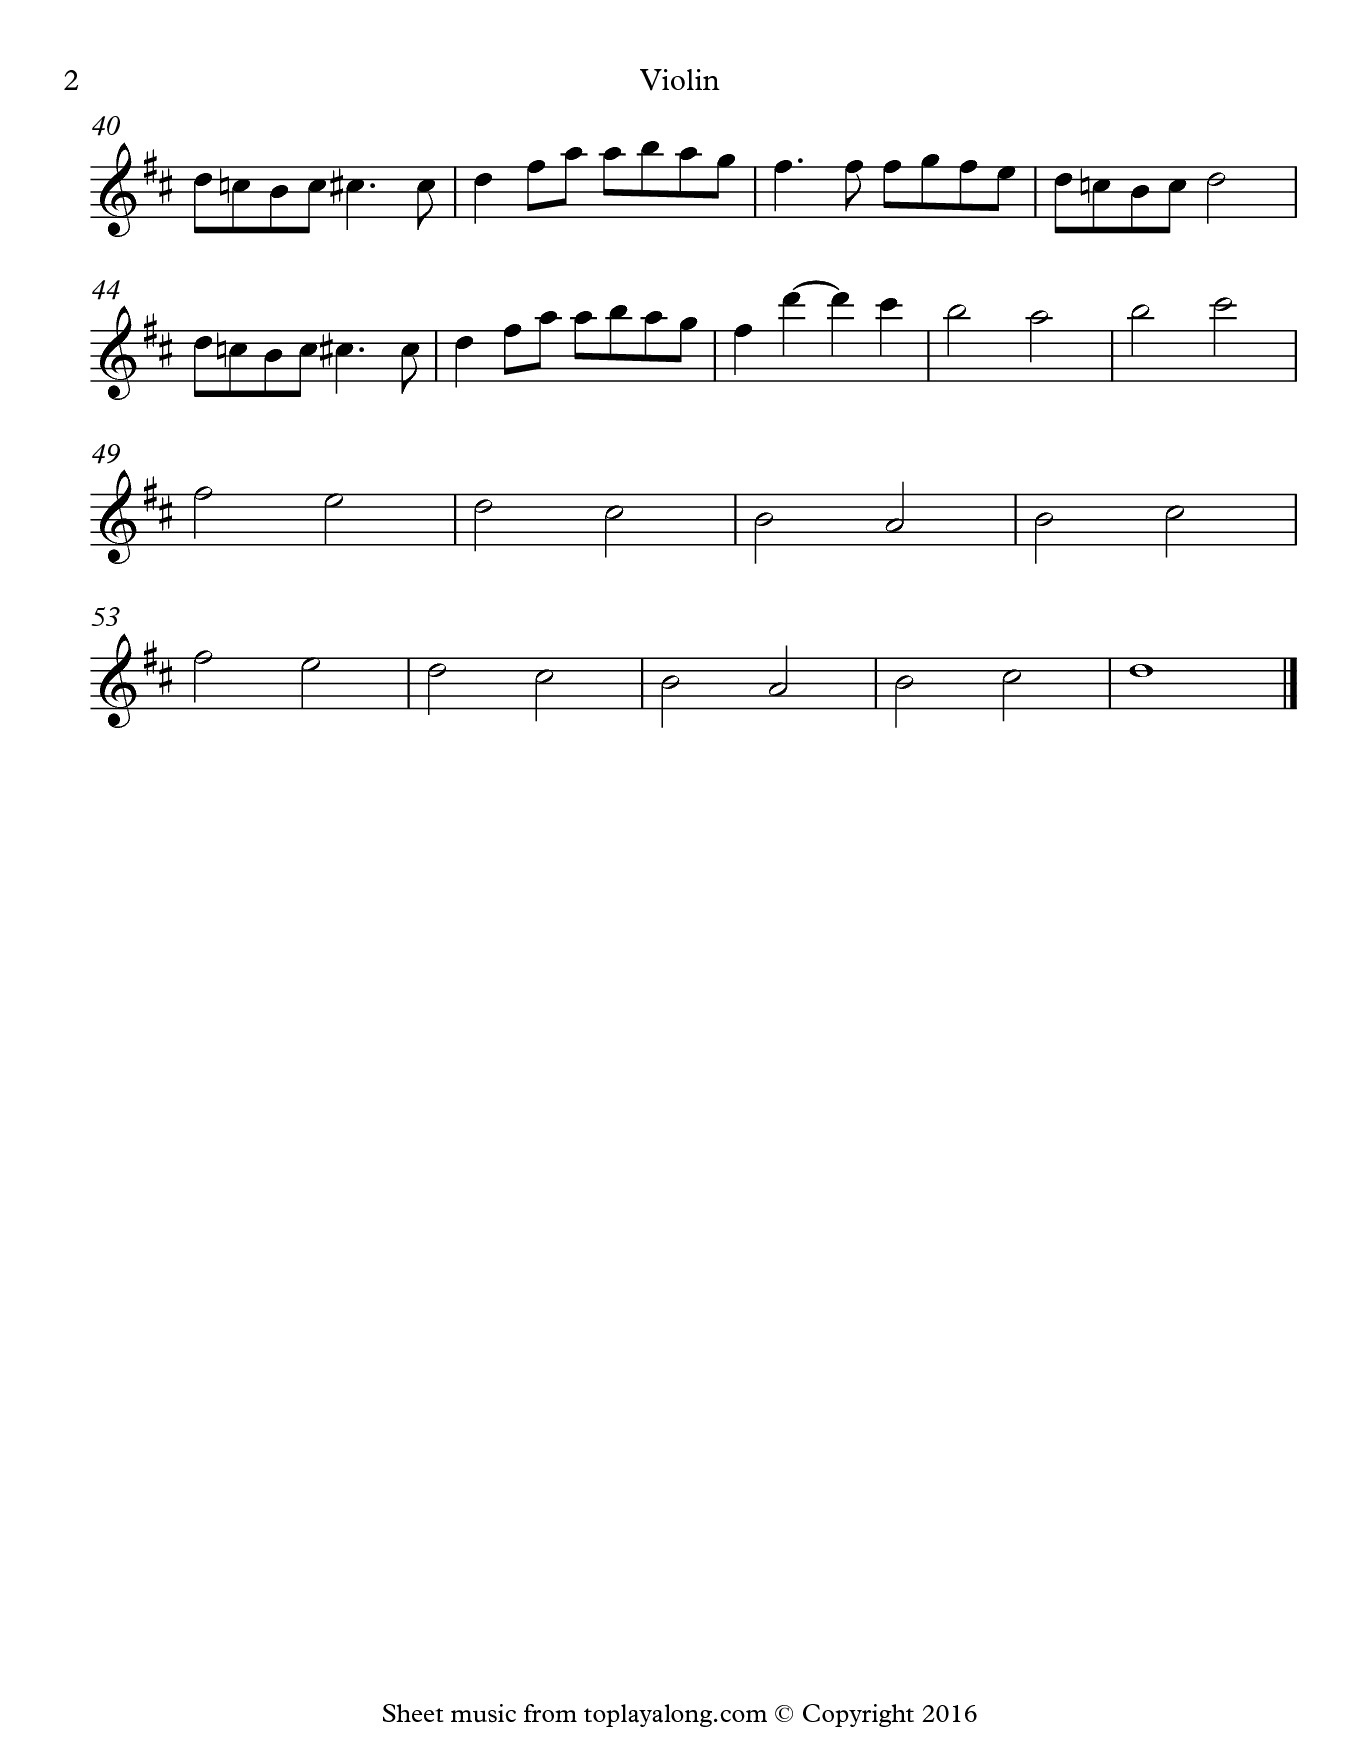 canon in d easy violin sheet music pdf